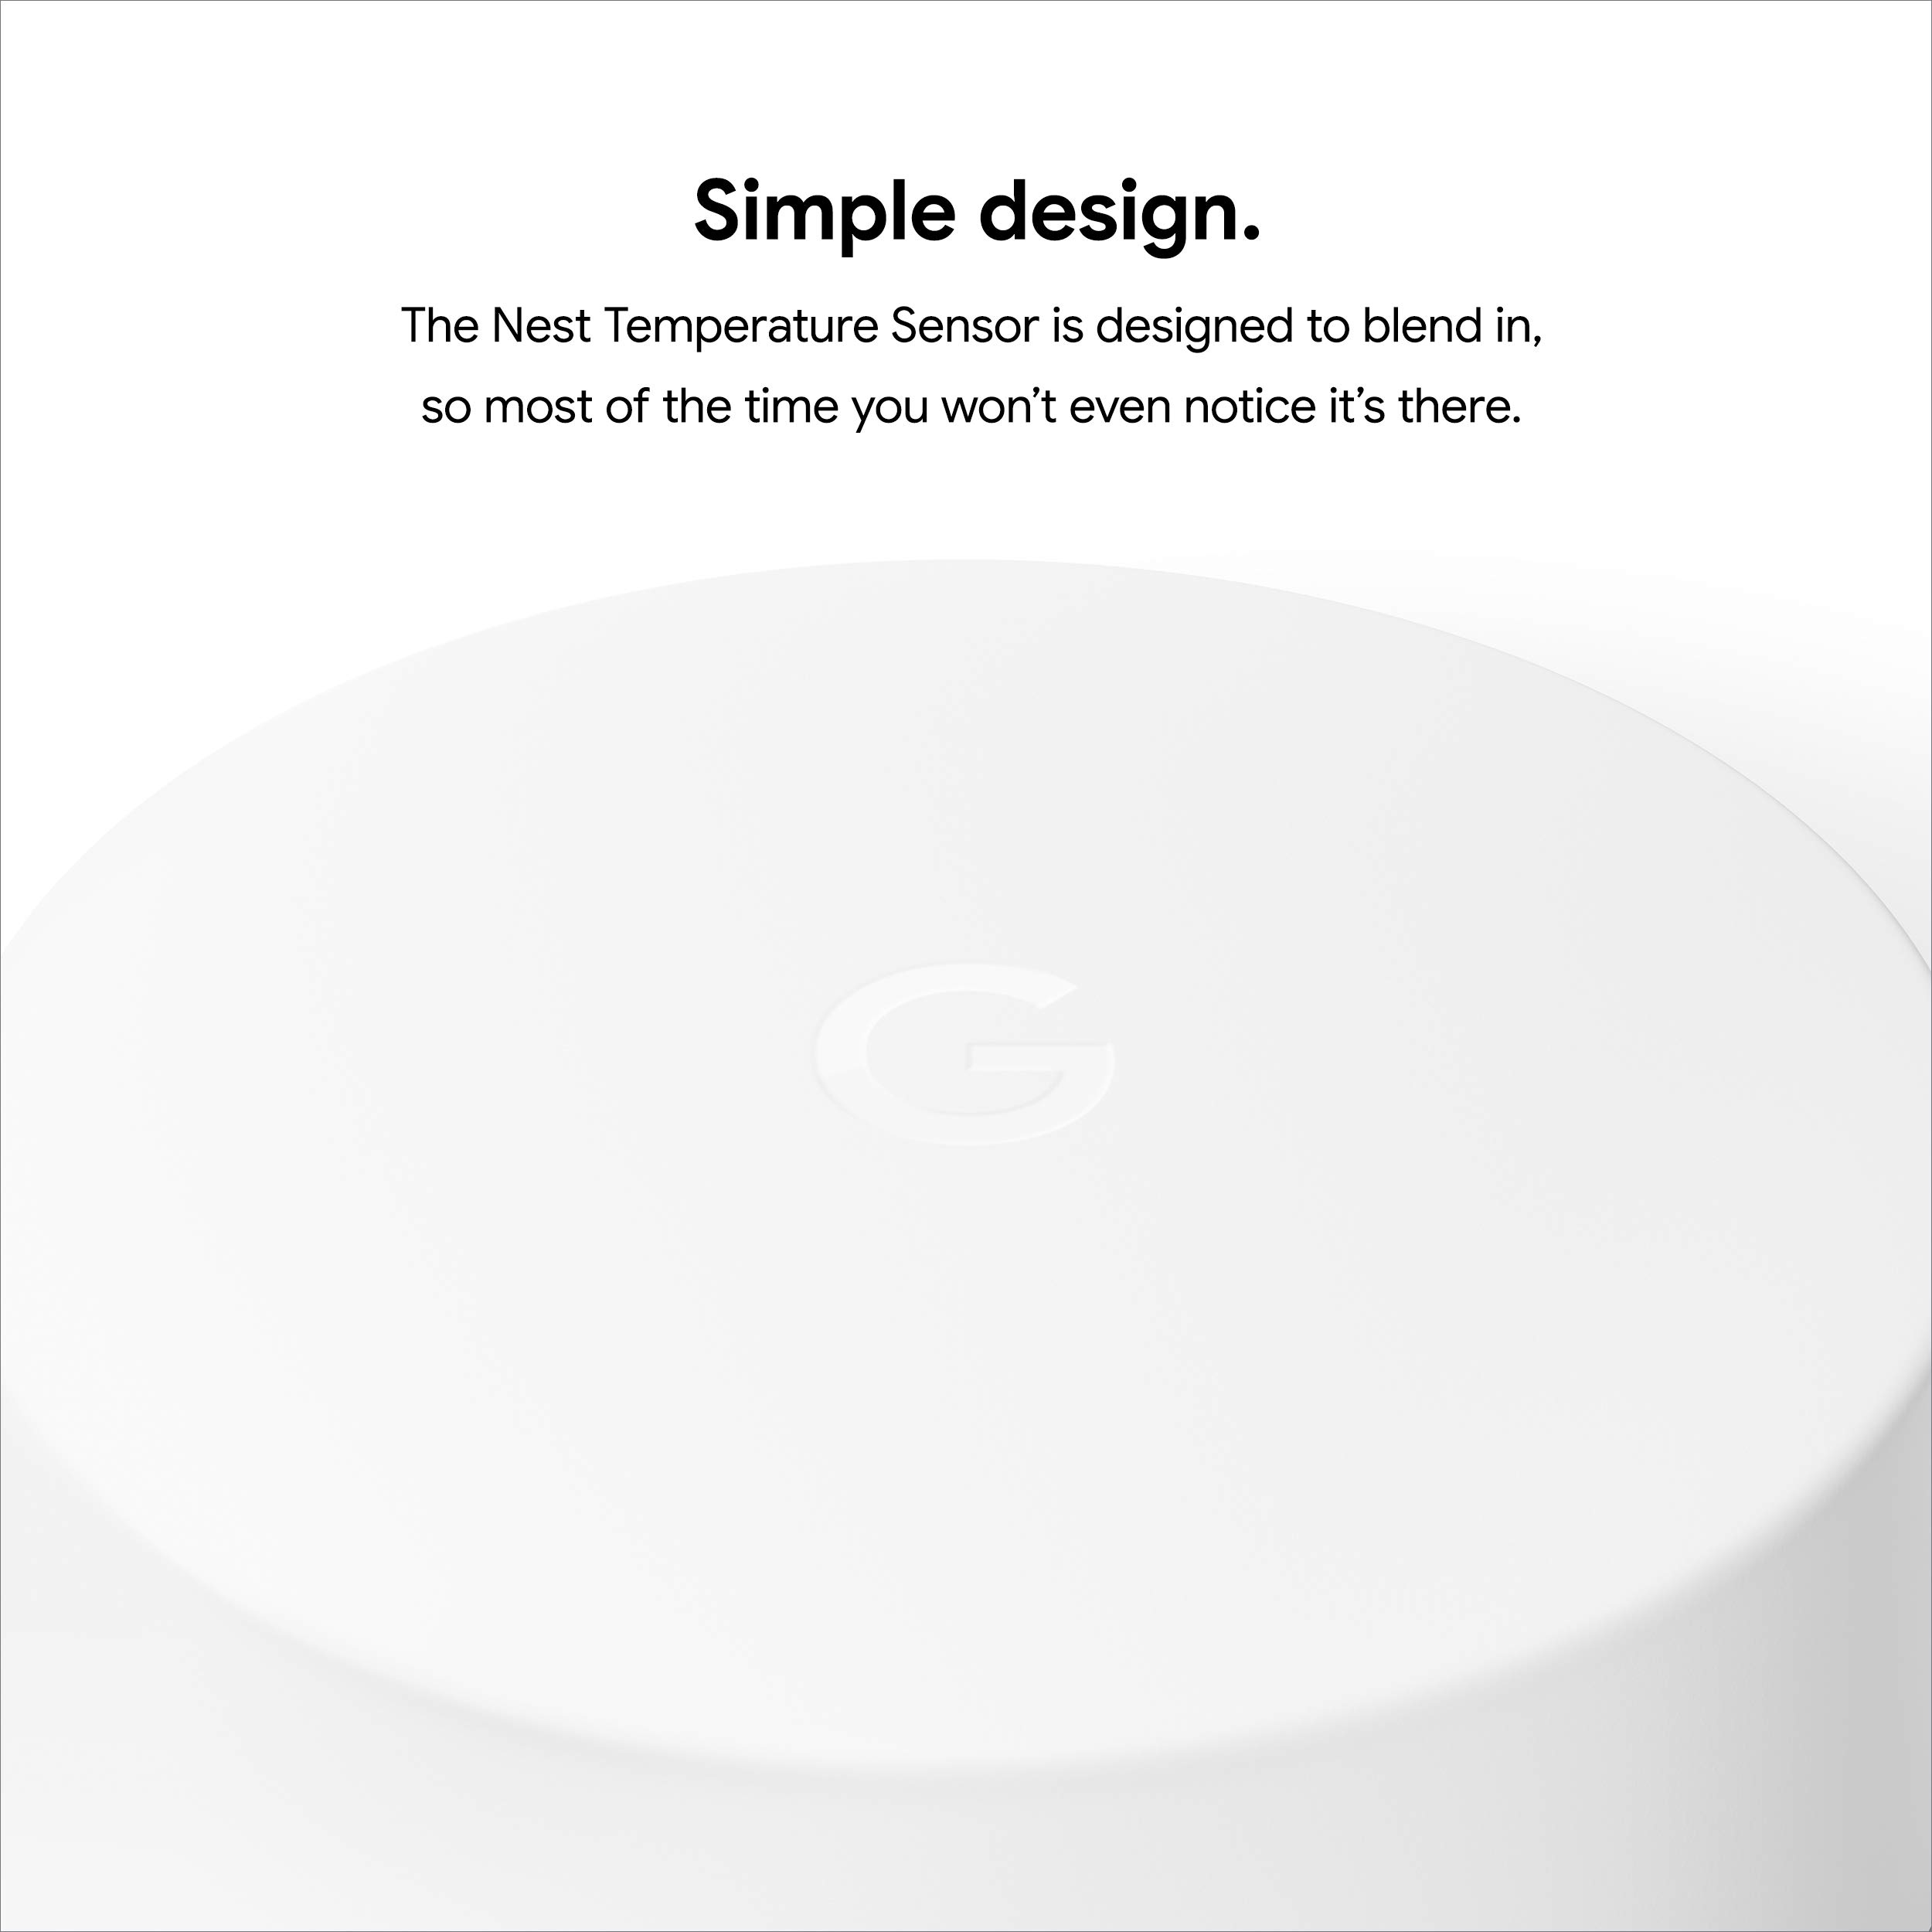 Google Nest Temperature Sensor 3 Count Pack - Nest Thermostat Sensor - Nest Sensor That Works with Nest Learning Thermostat and Nest Thermostat E - Smart Home